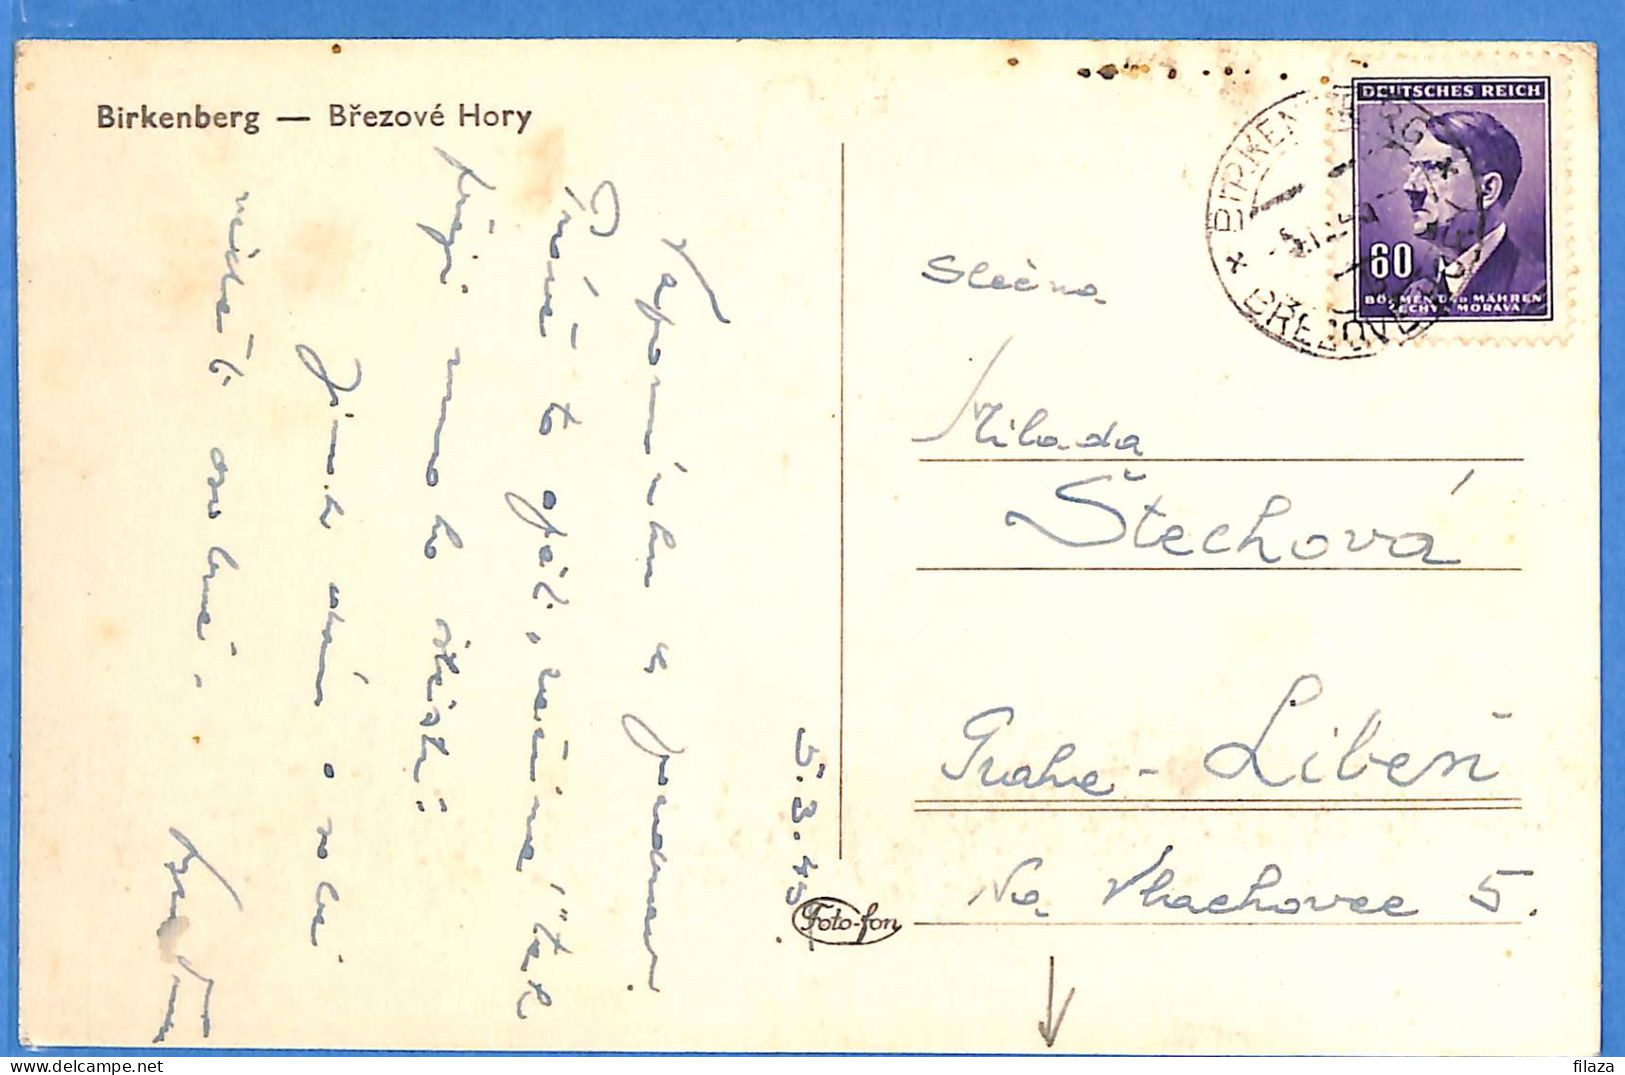 Böhmen Und Mähren 1945 - Carte Postale De Birkenberg - G34605 - Storia Postale